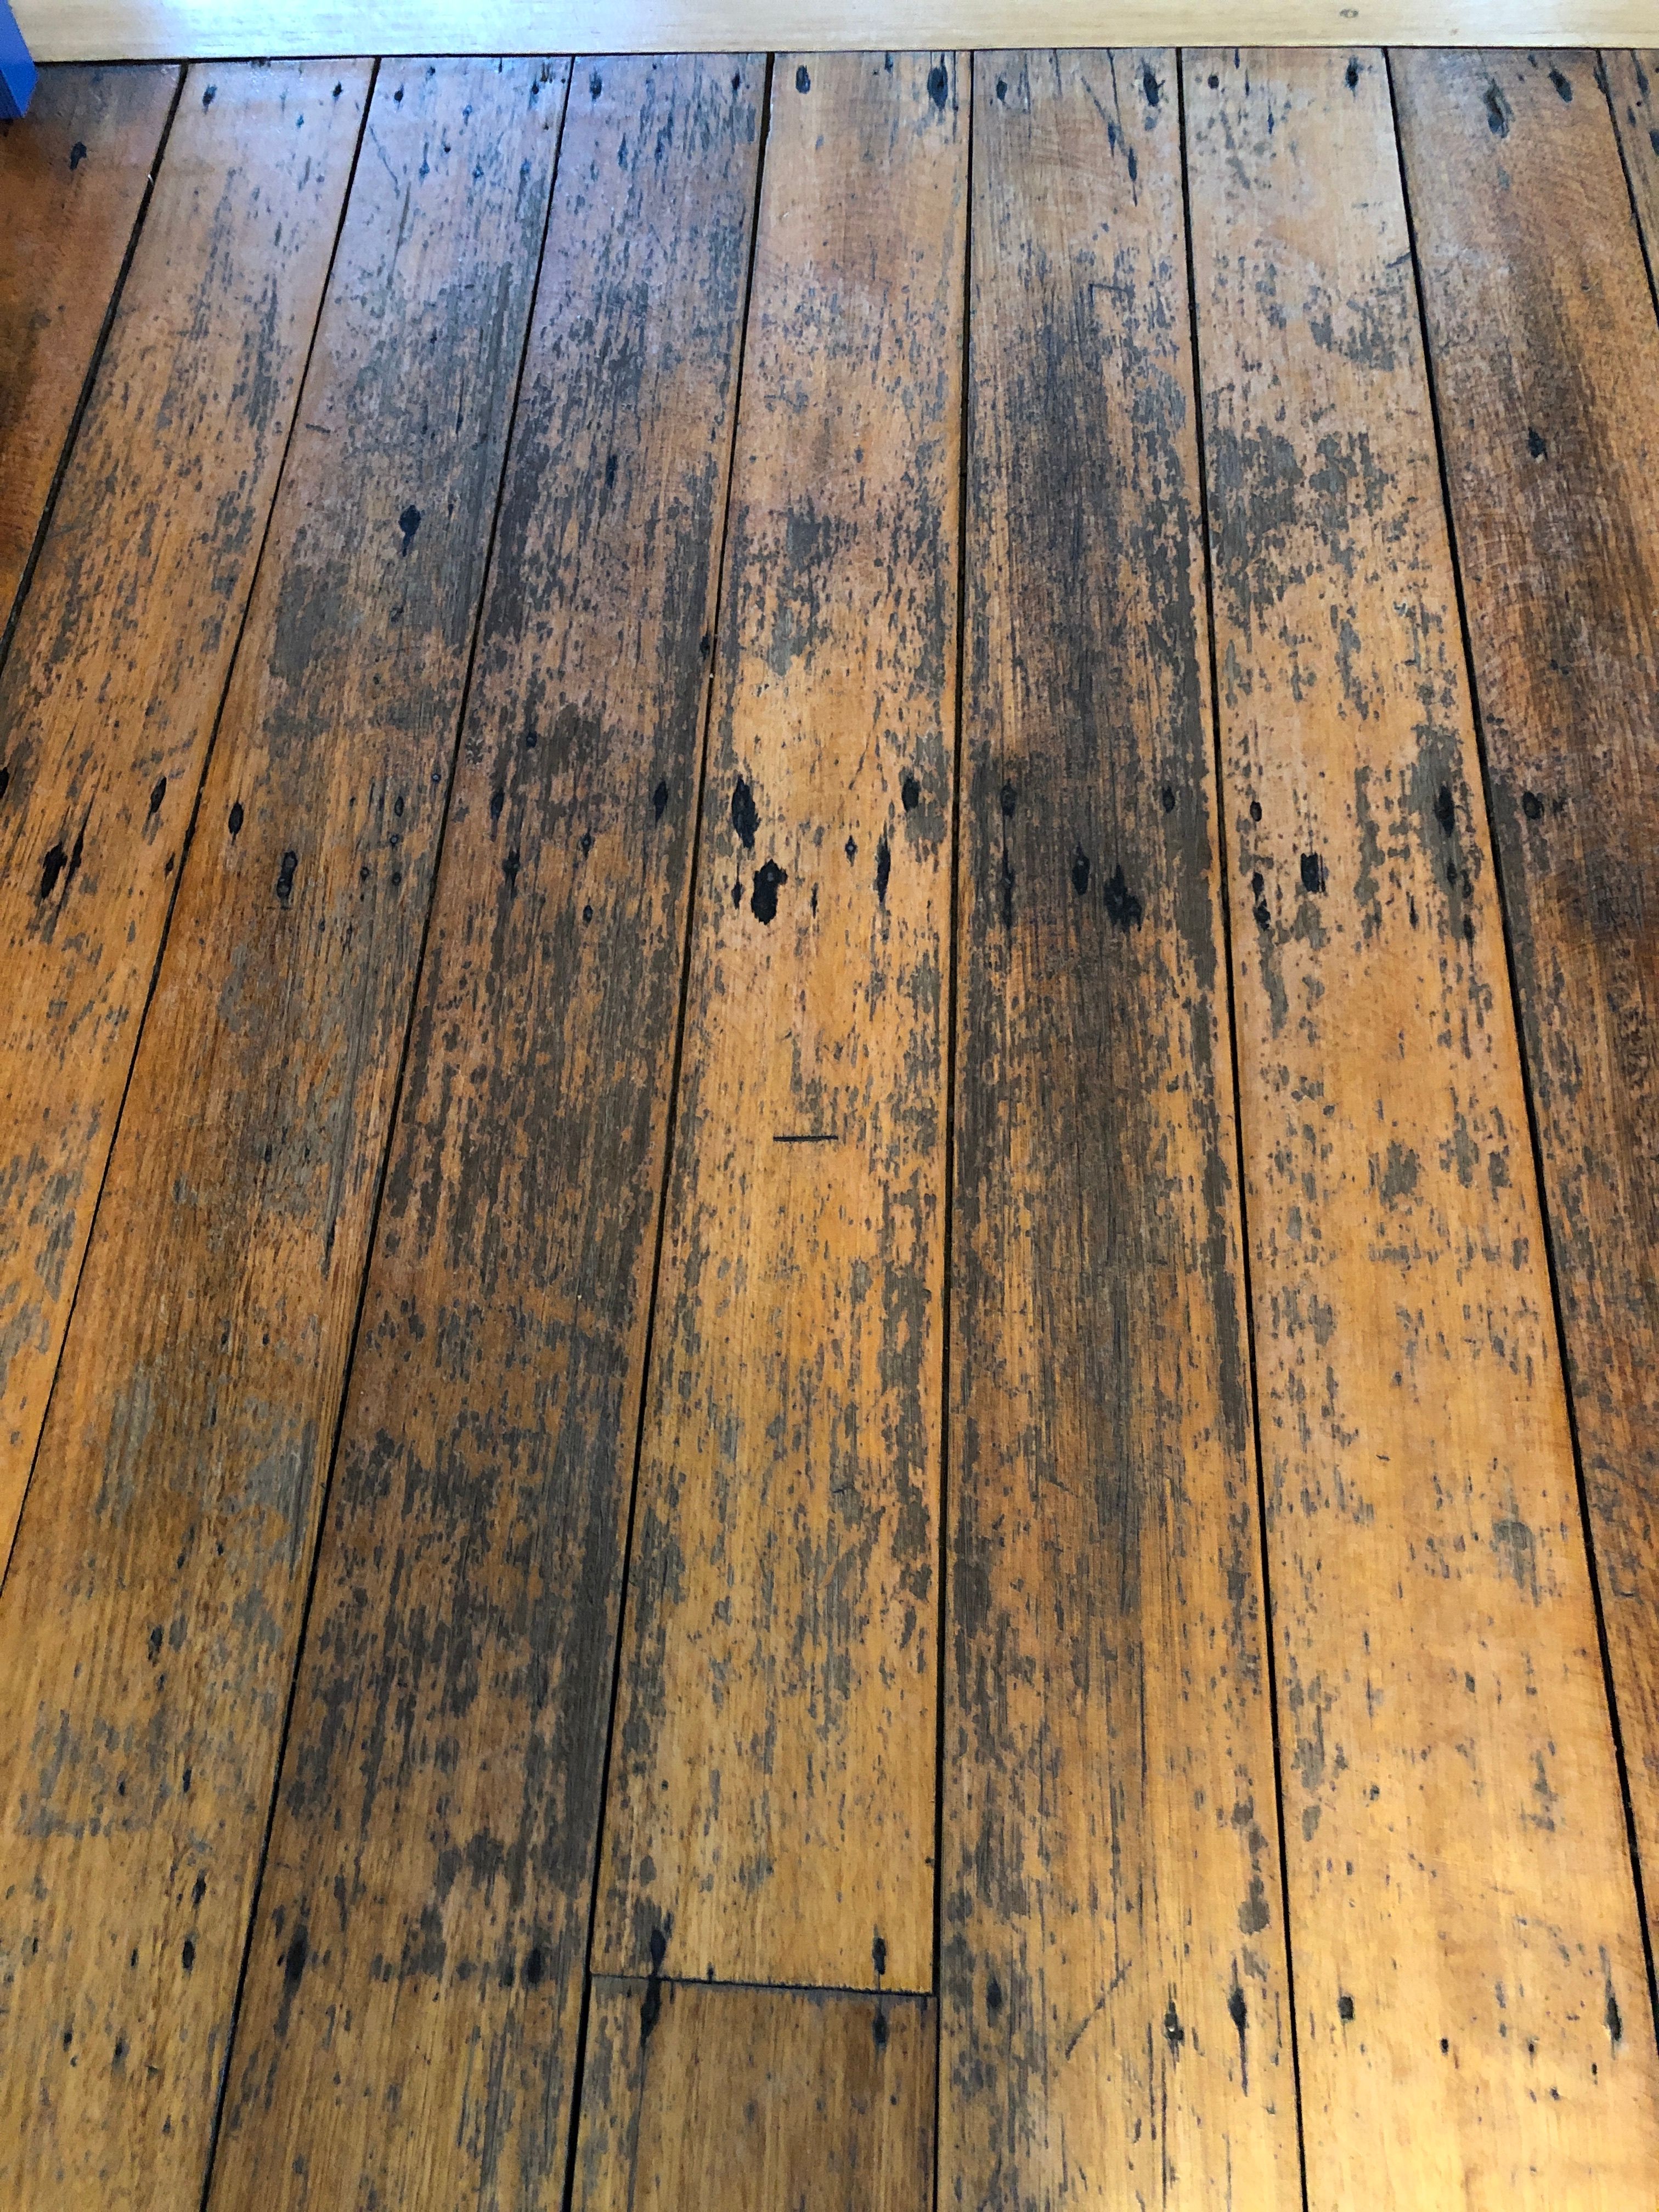 old floor boards refresher | Bunnings Workshop community